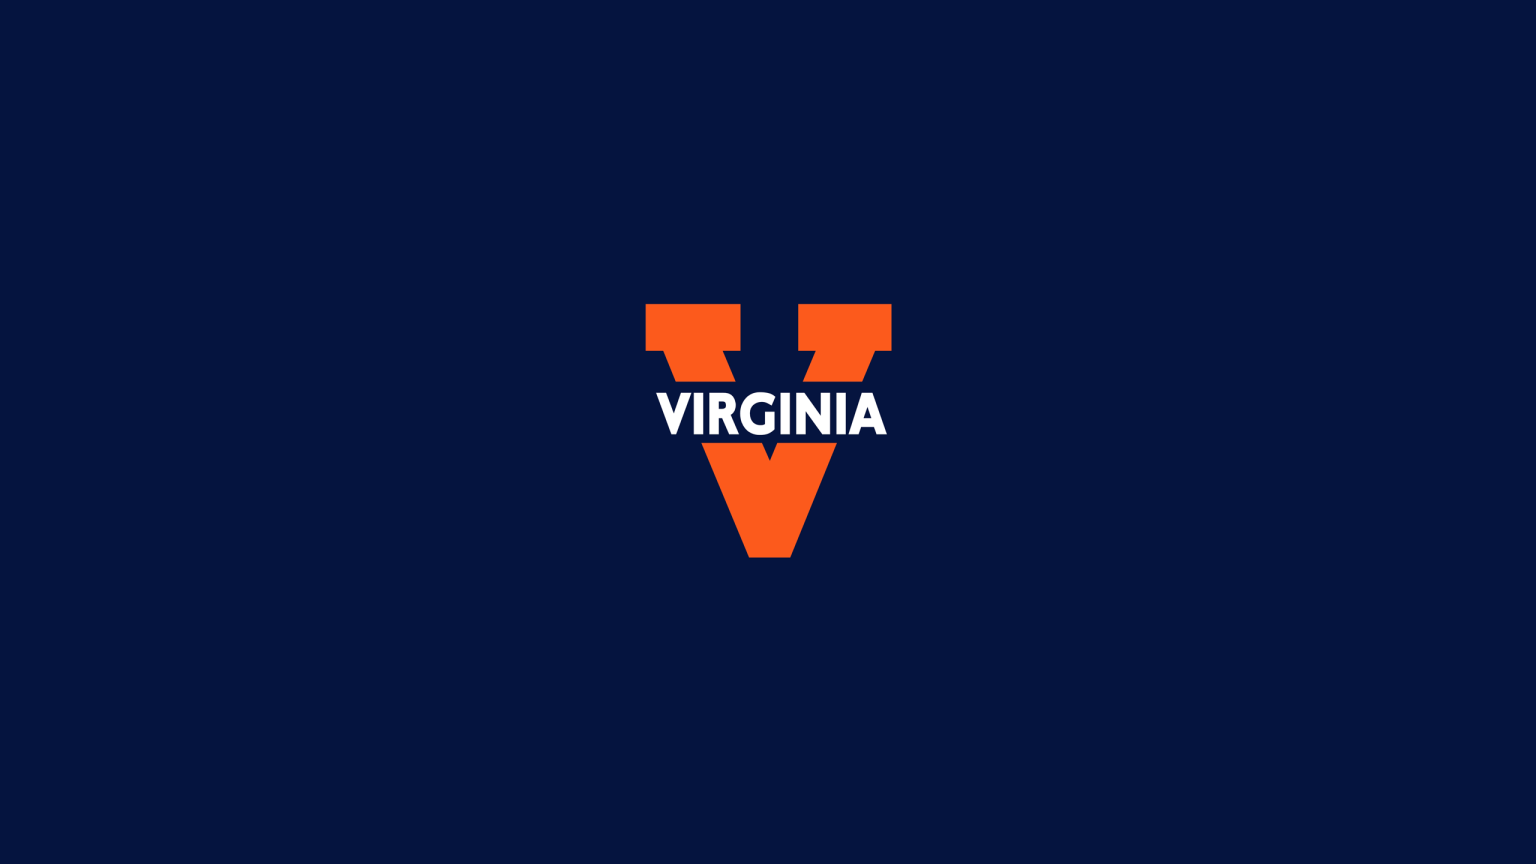 Virginia Cavaliers Basketball - NCAAB - Square Bettor